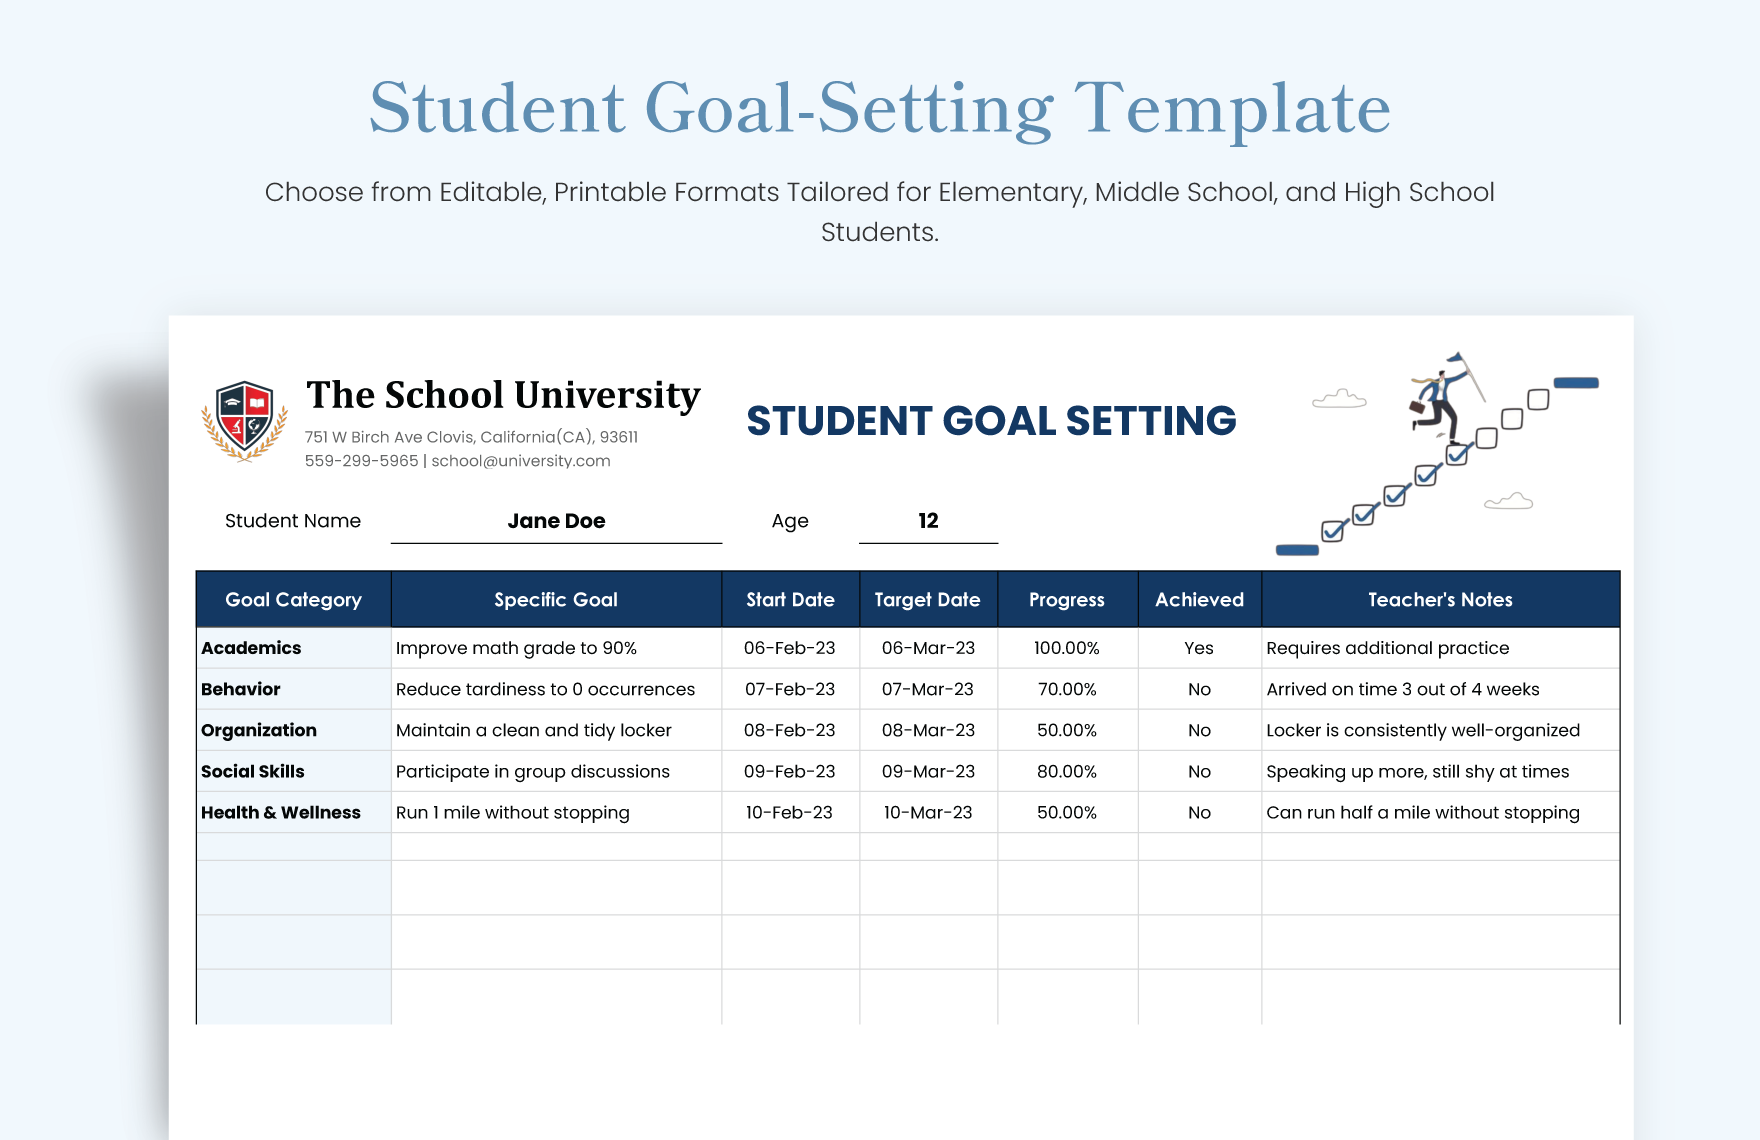 Student Goal-Setting Template